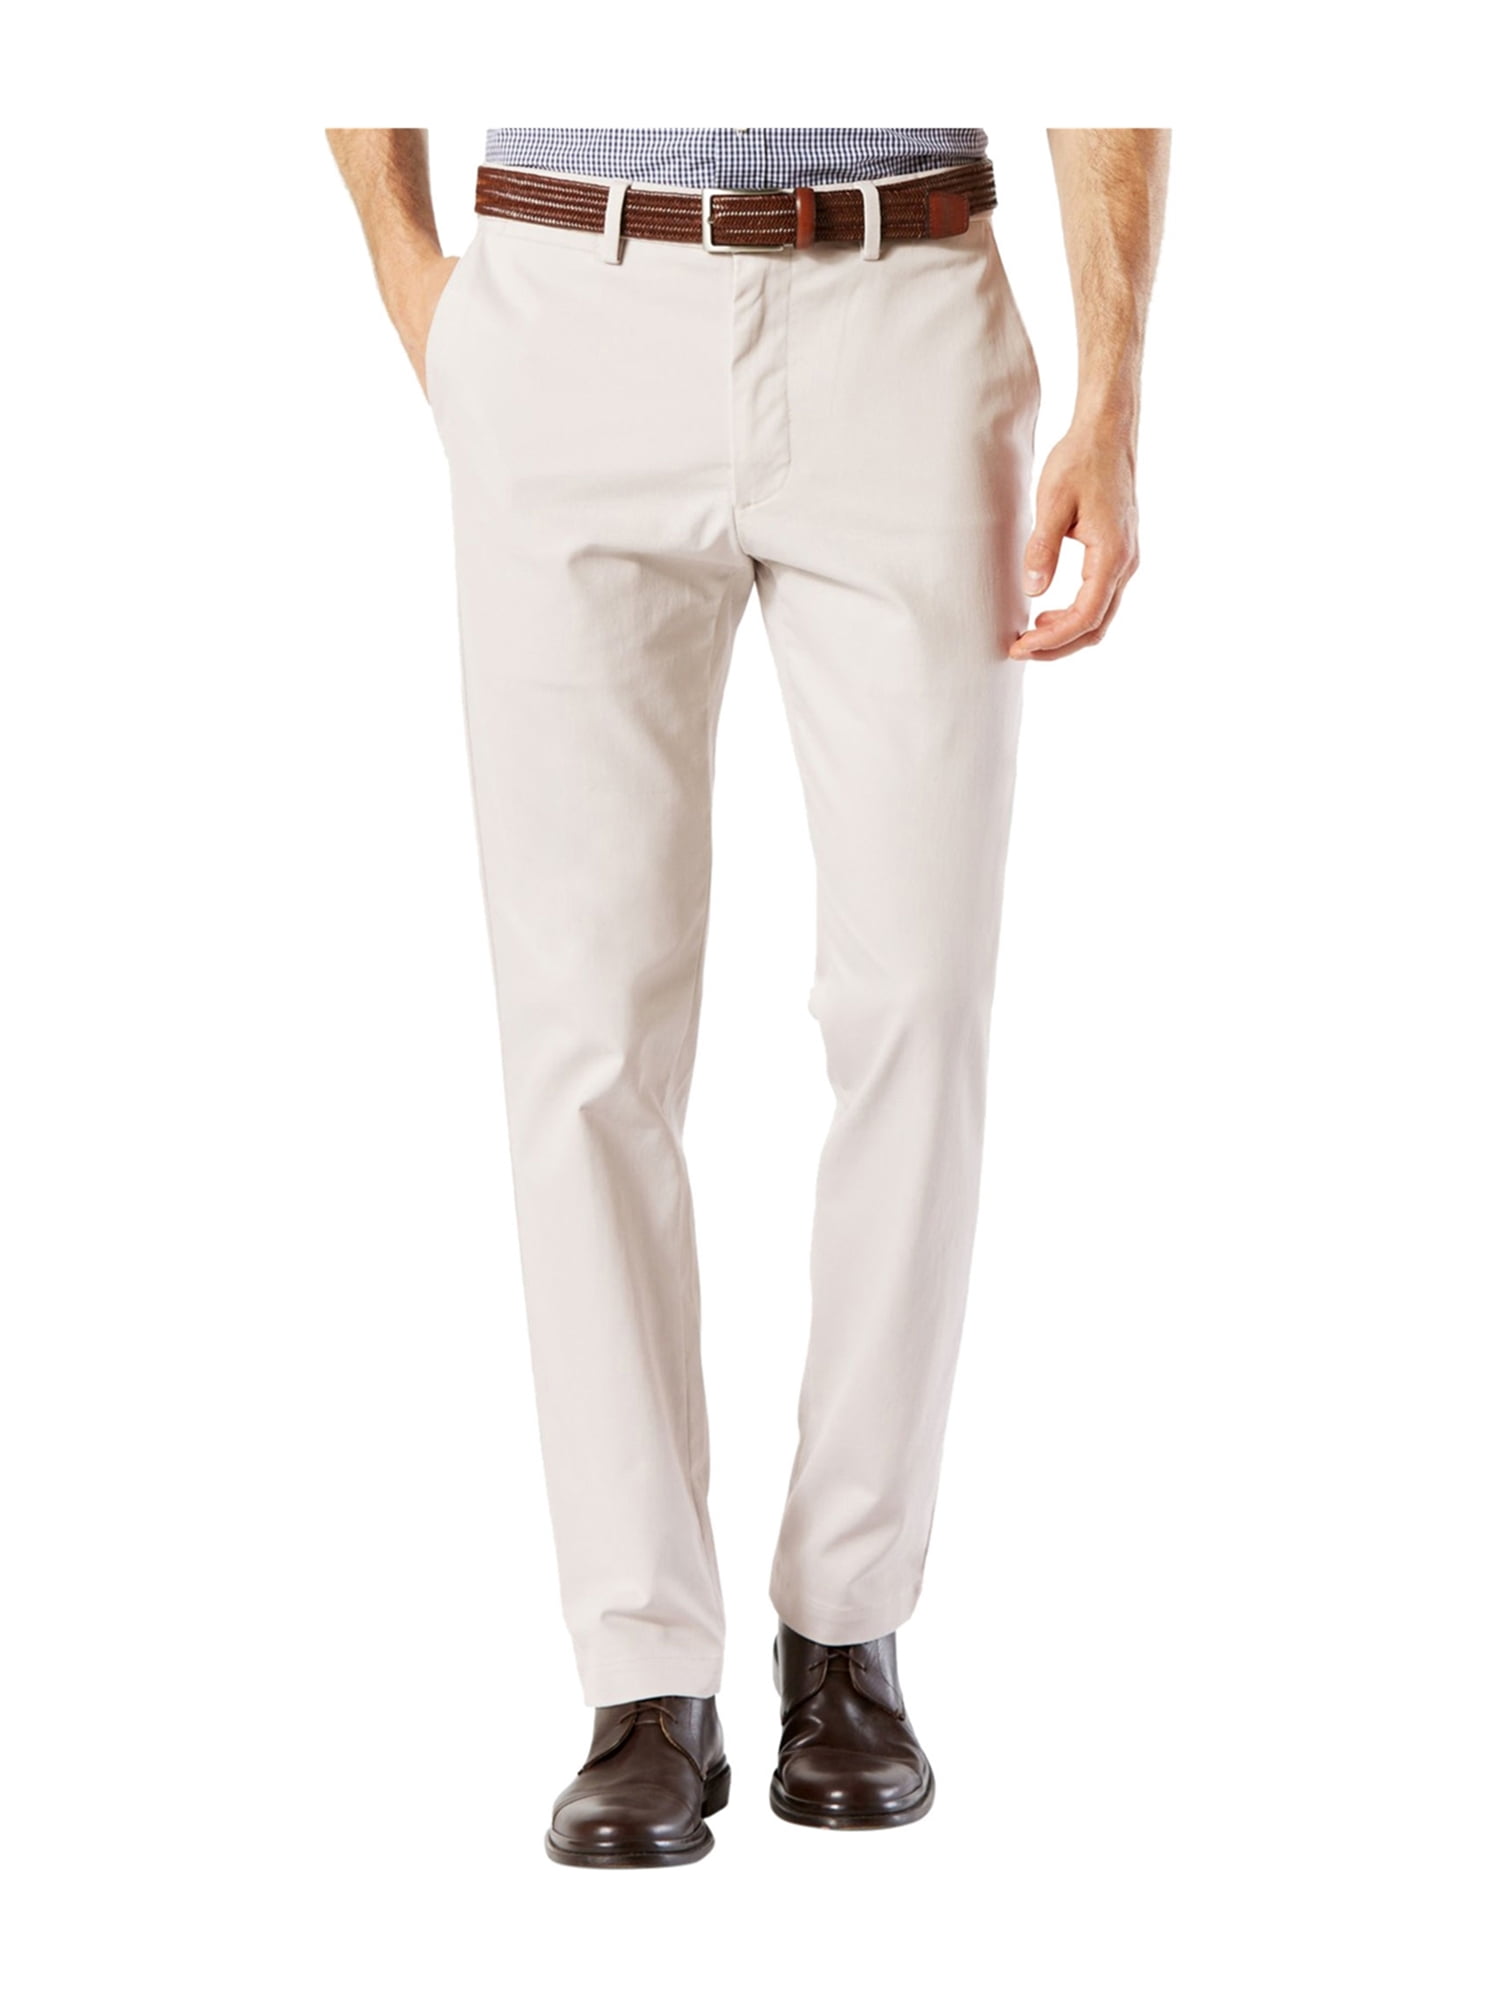 Dockers Mens Clean Khaki Casual Trouser Pants ltbeige 38x32 | Walmart ...